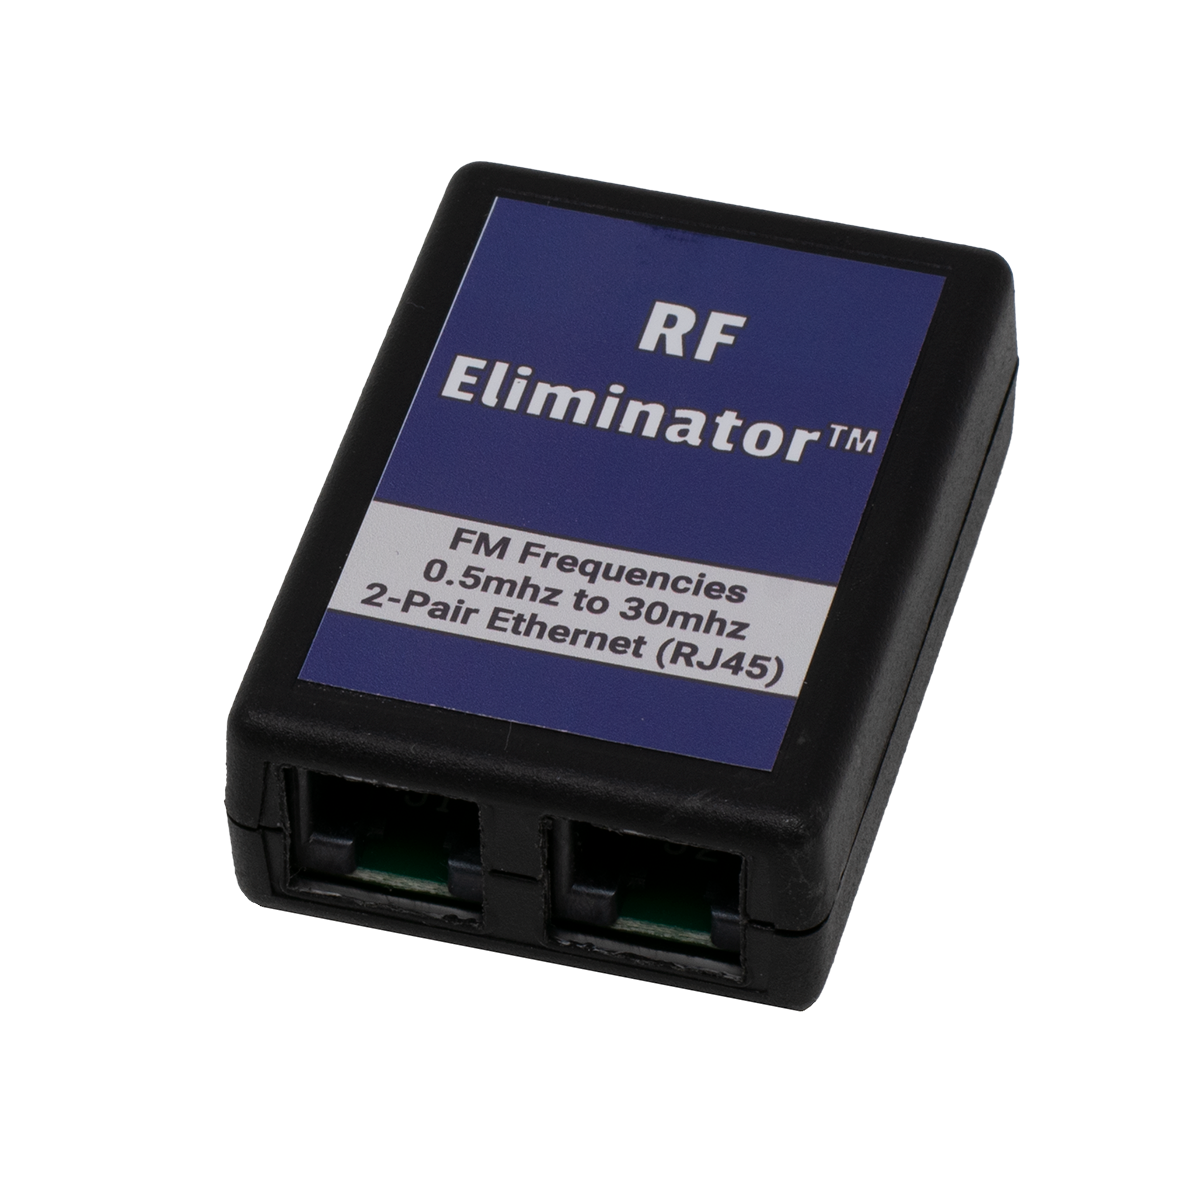 RF Eliminator - 2 Pair Ethernet - FM (Side View)